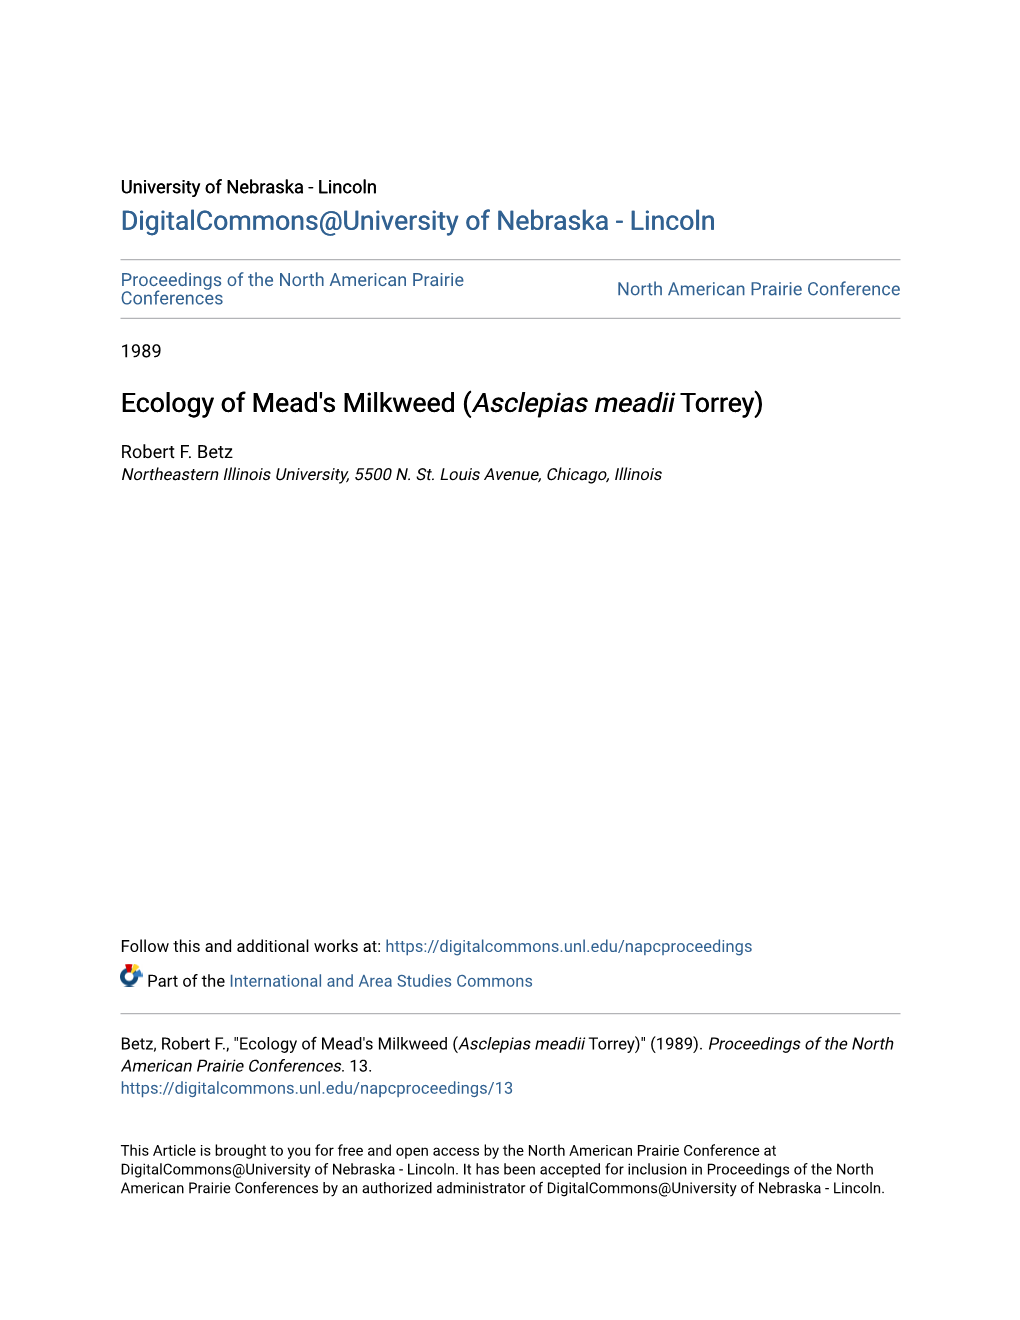 Ecology of Mead's Milkweed (Asclepias Meadii Torrey)